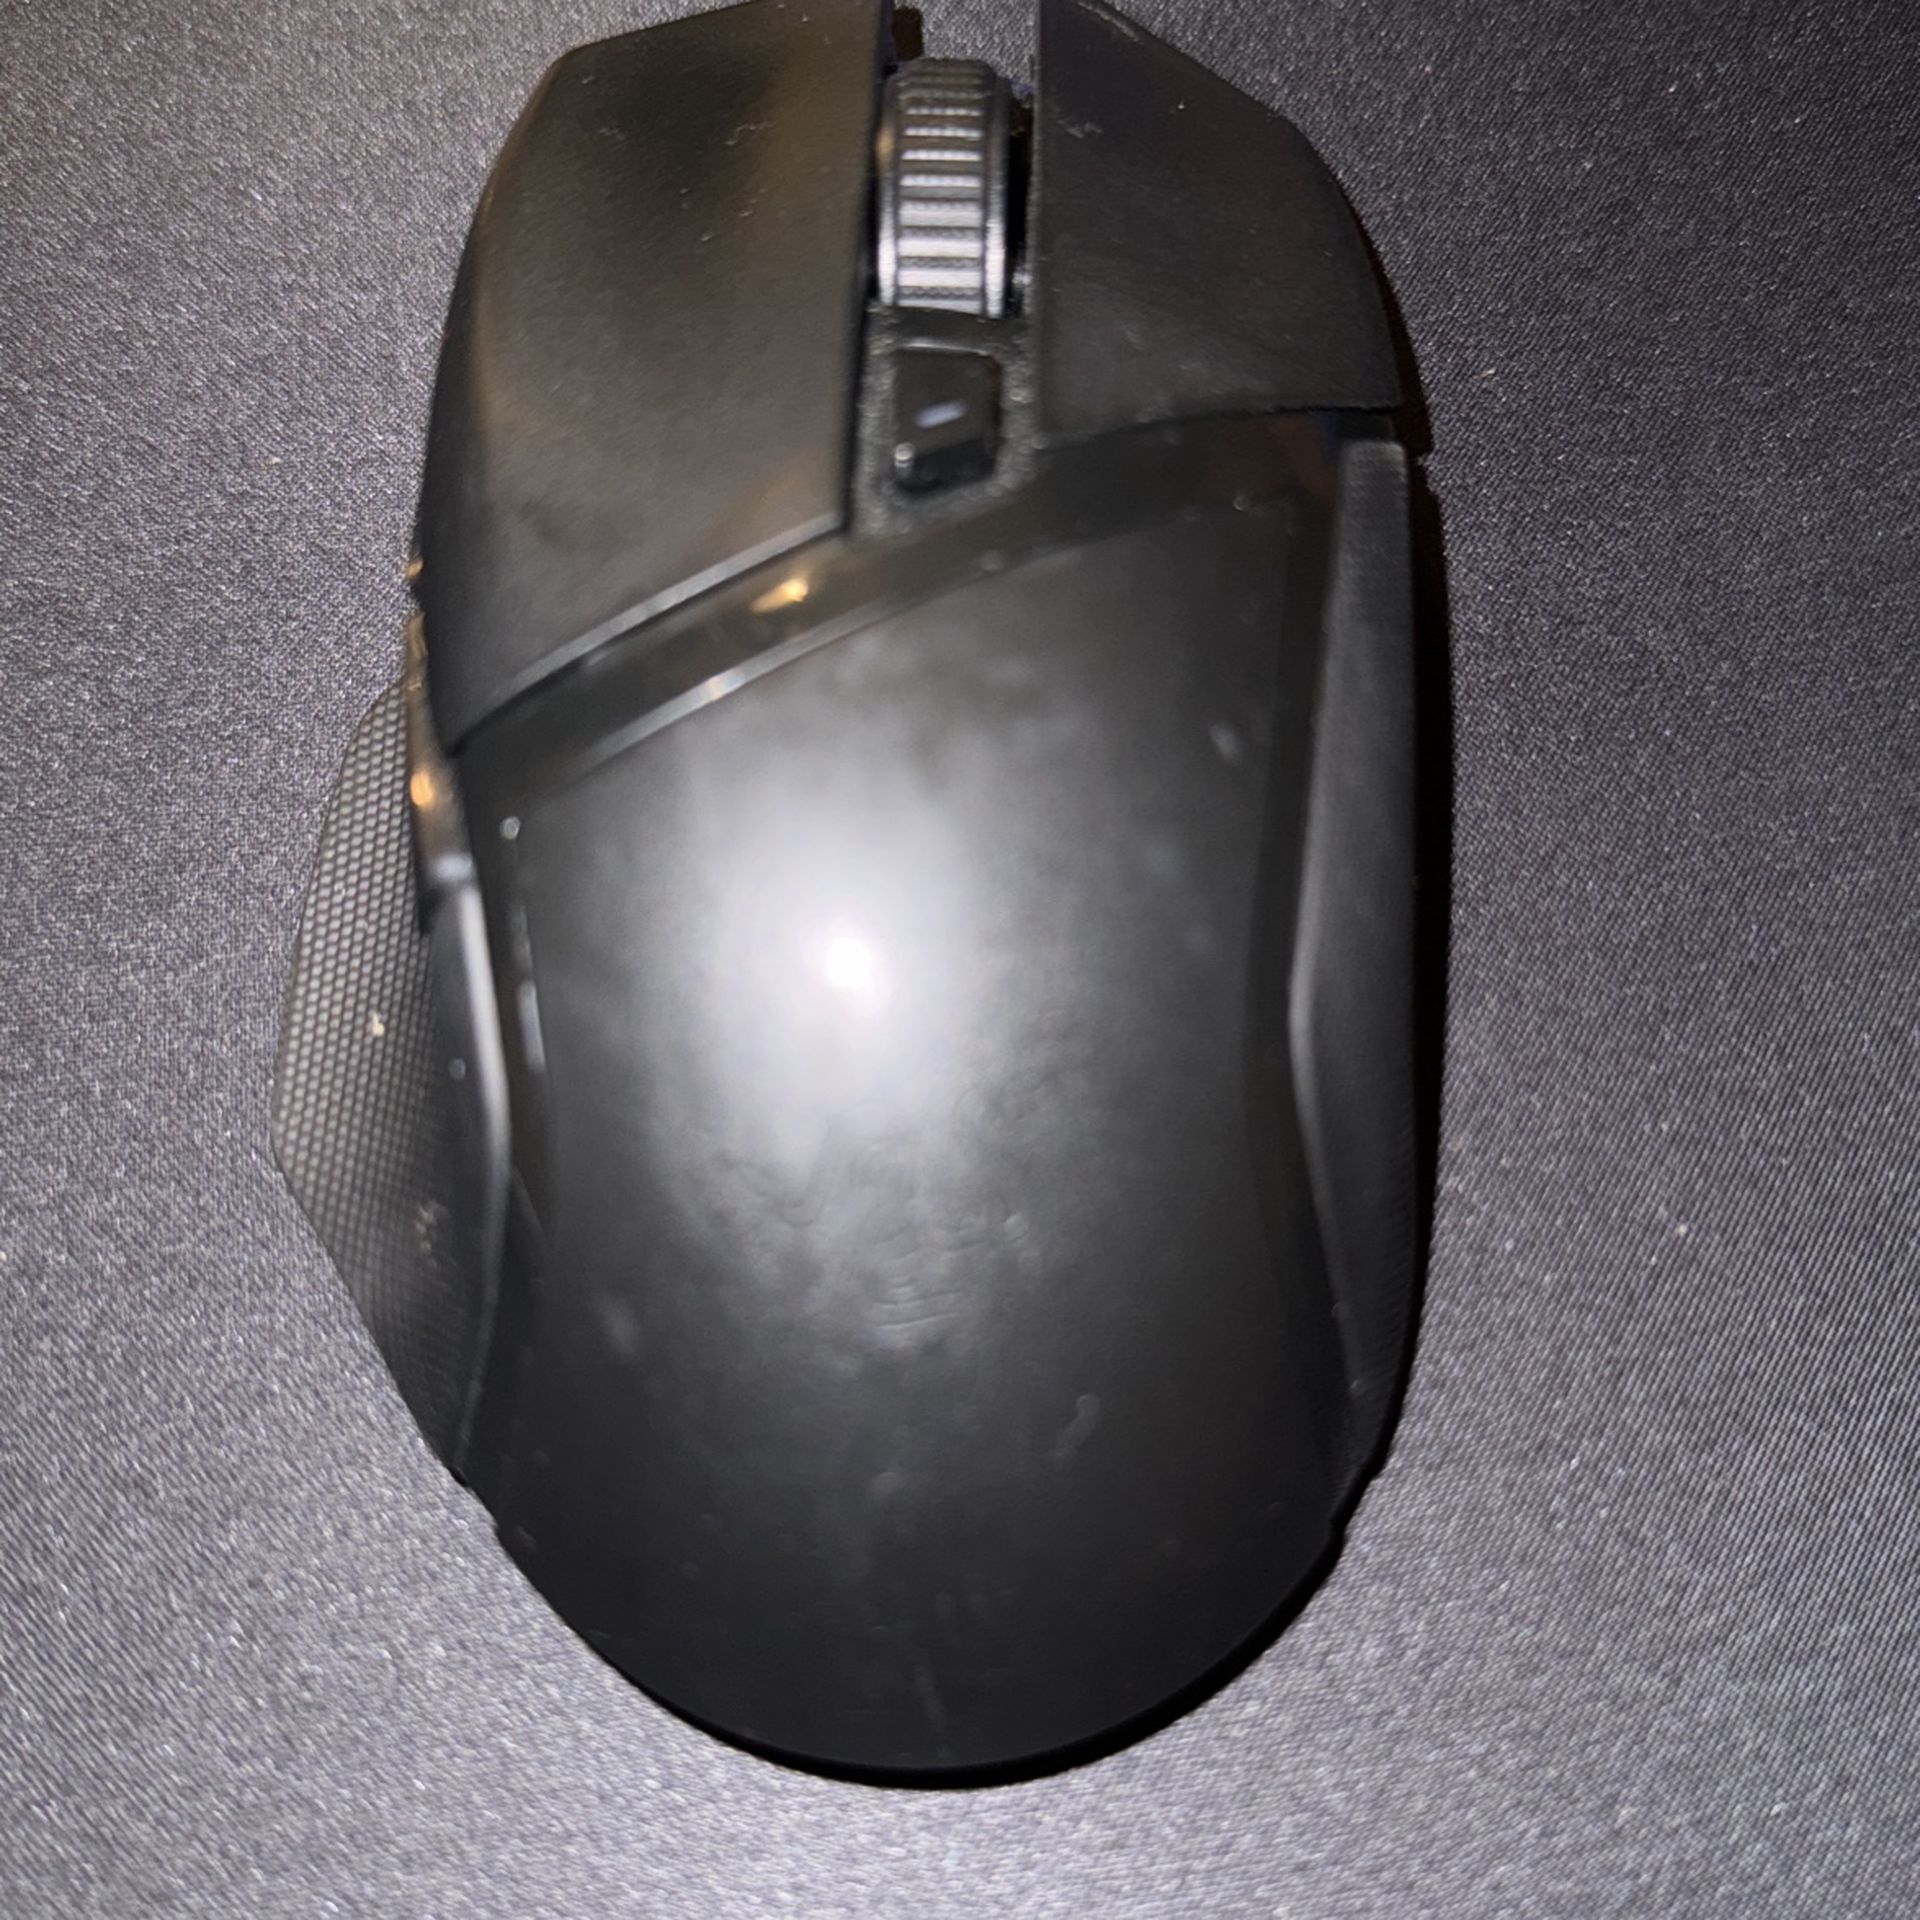 Razer Wireless Mouse 